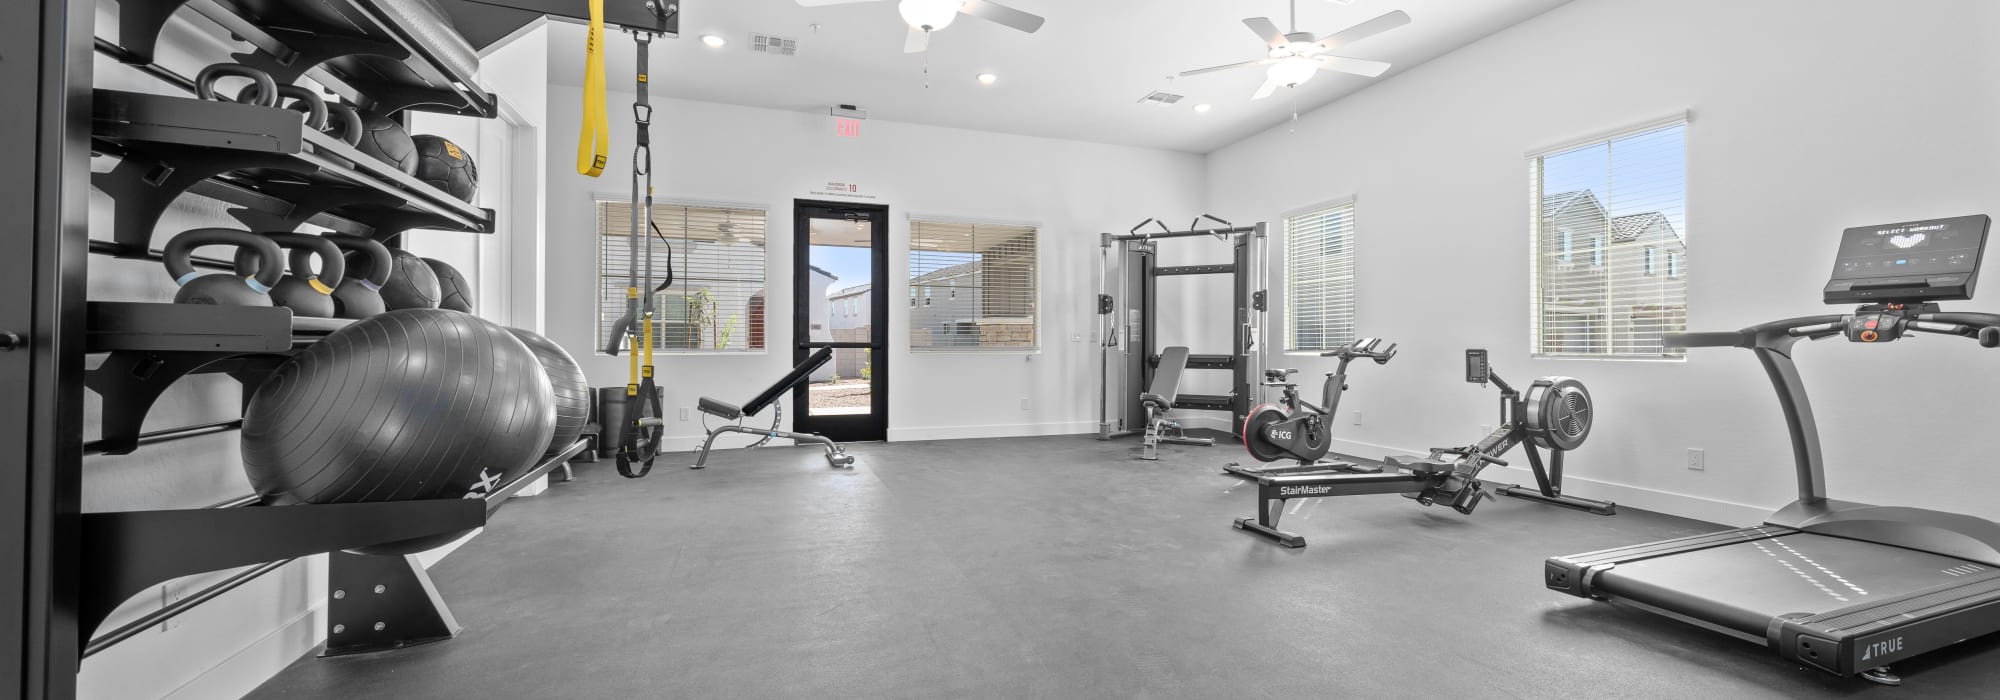 Fitness Center at Ironwood Homes at River Run in Avondale, Arizona